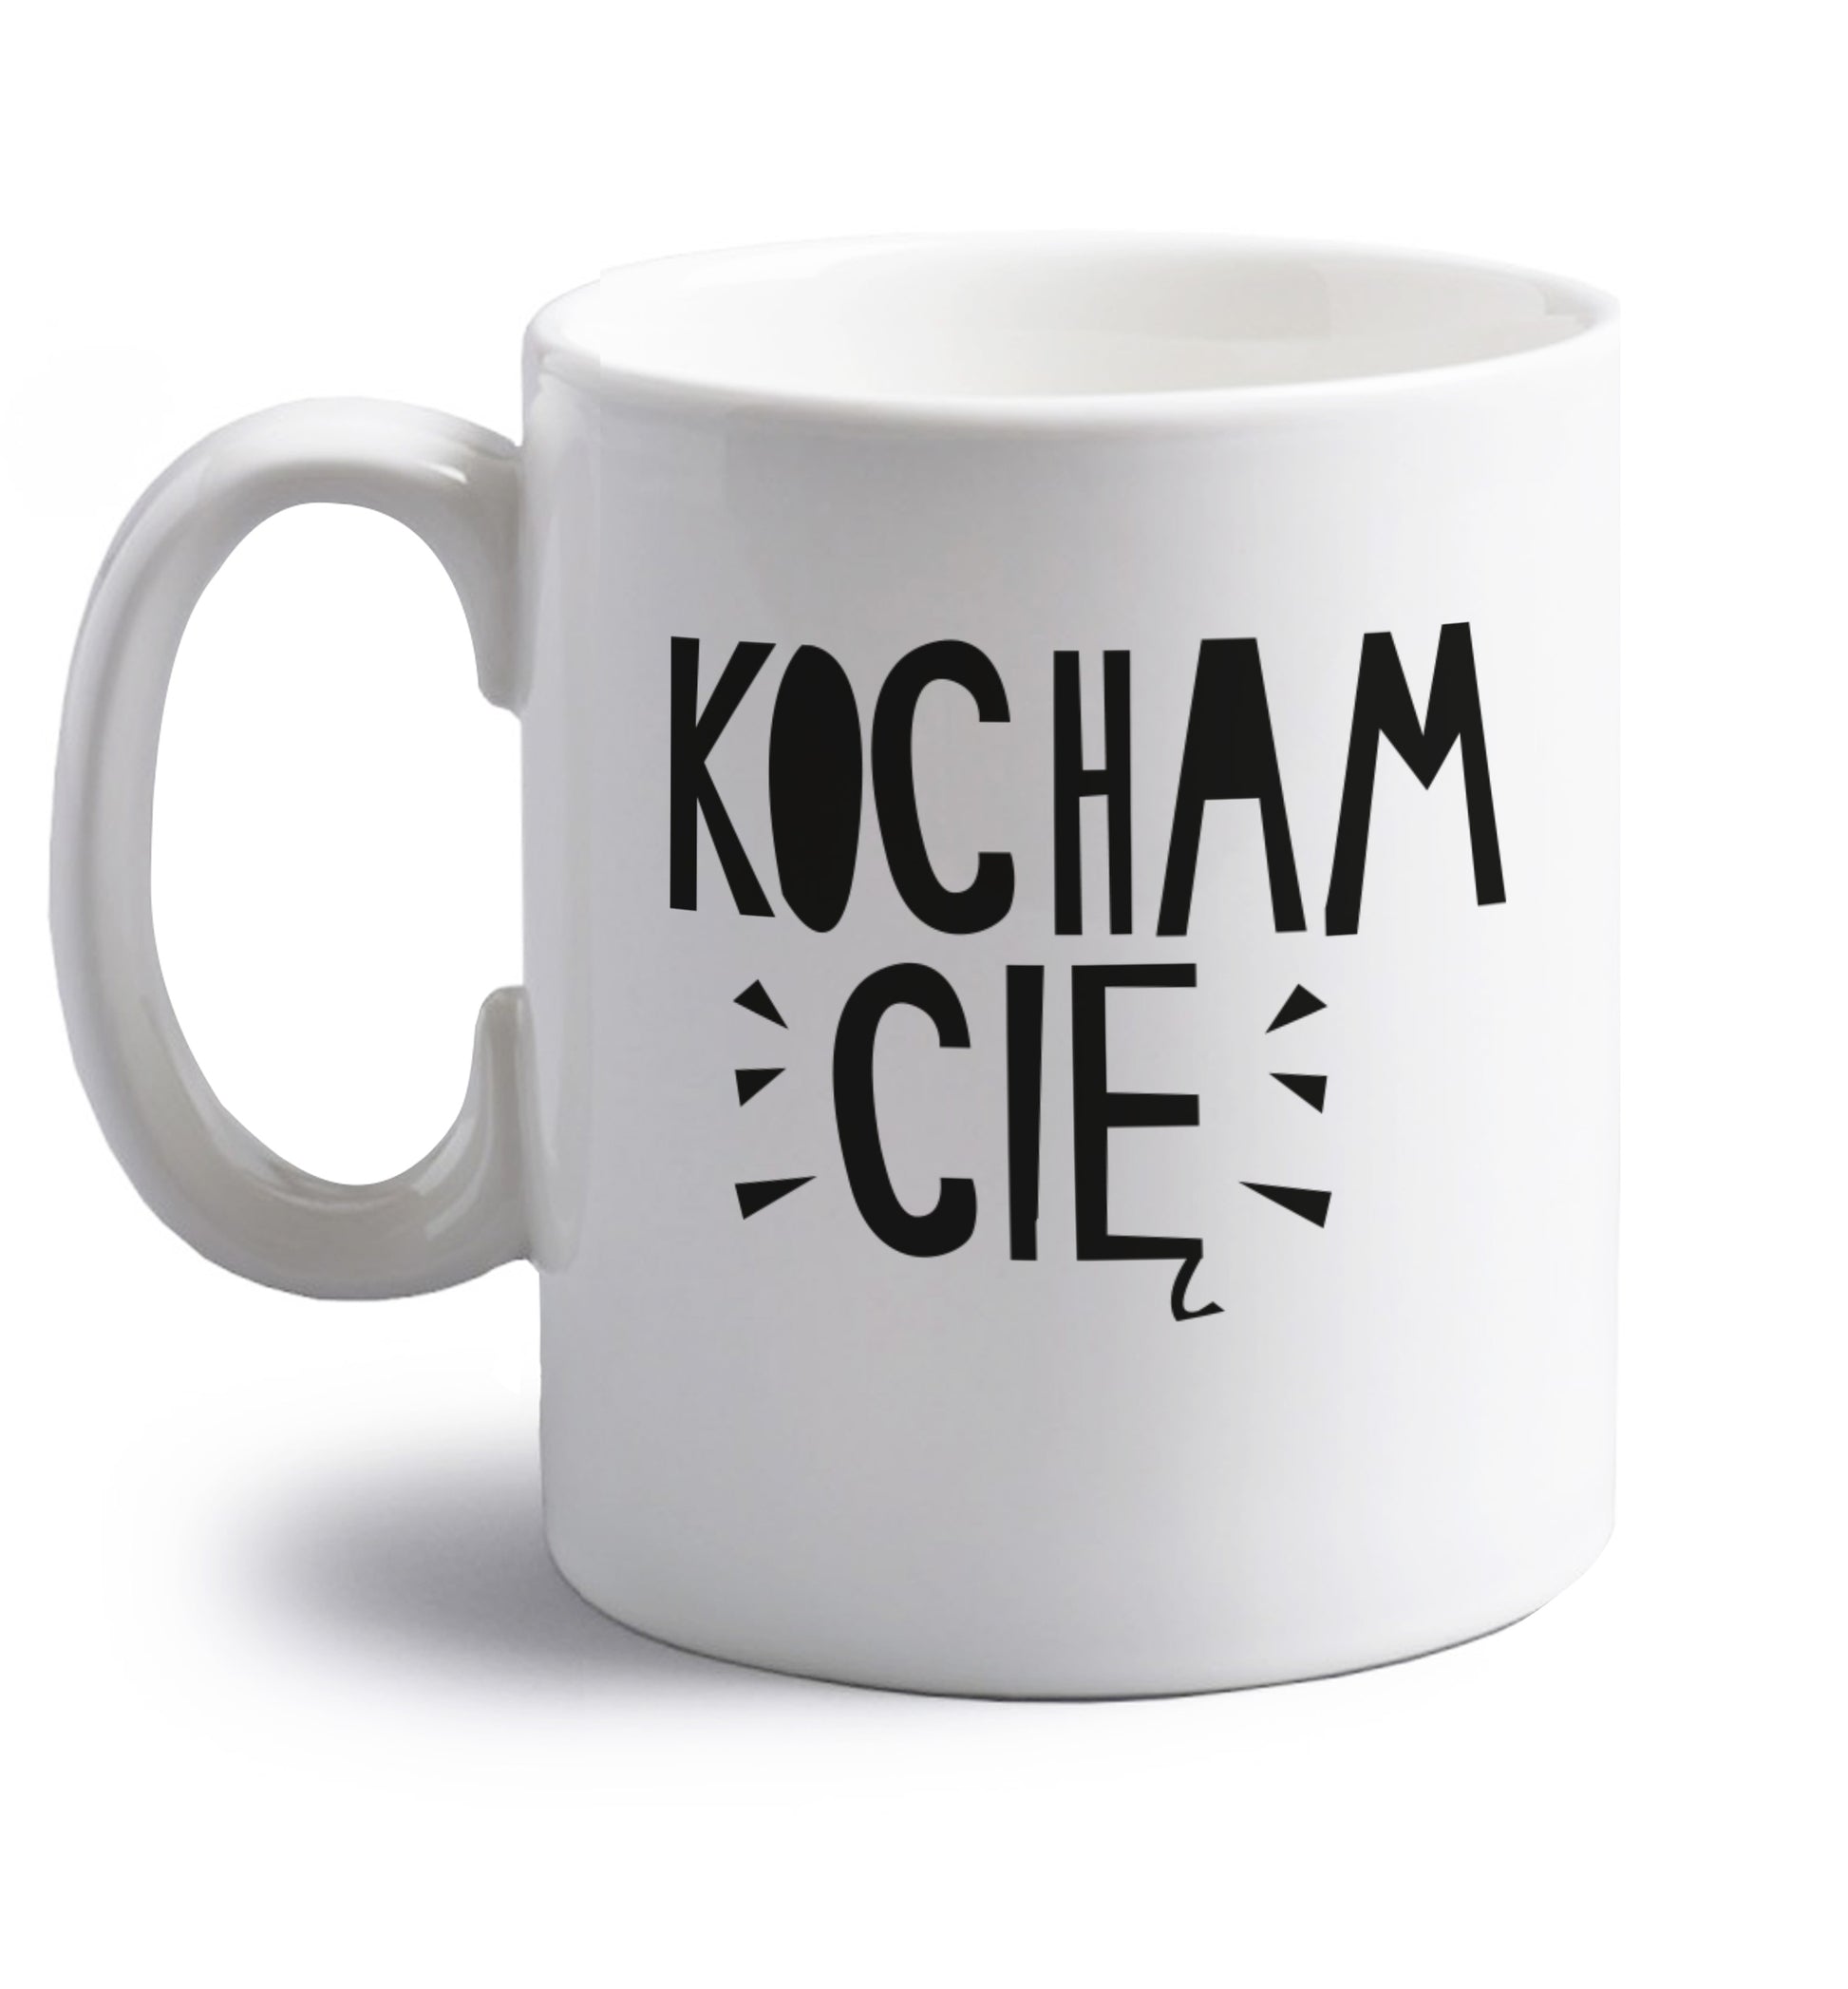 Kocham ci_ - I love you right handed white ceramic mug 